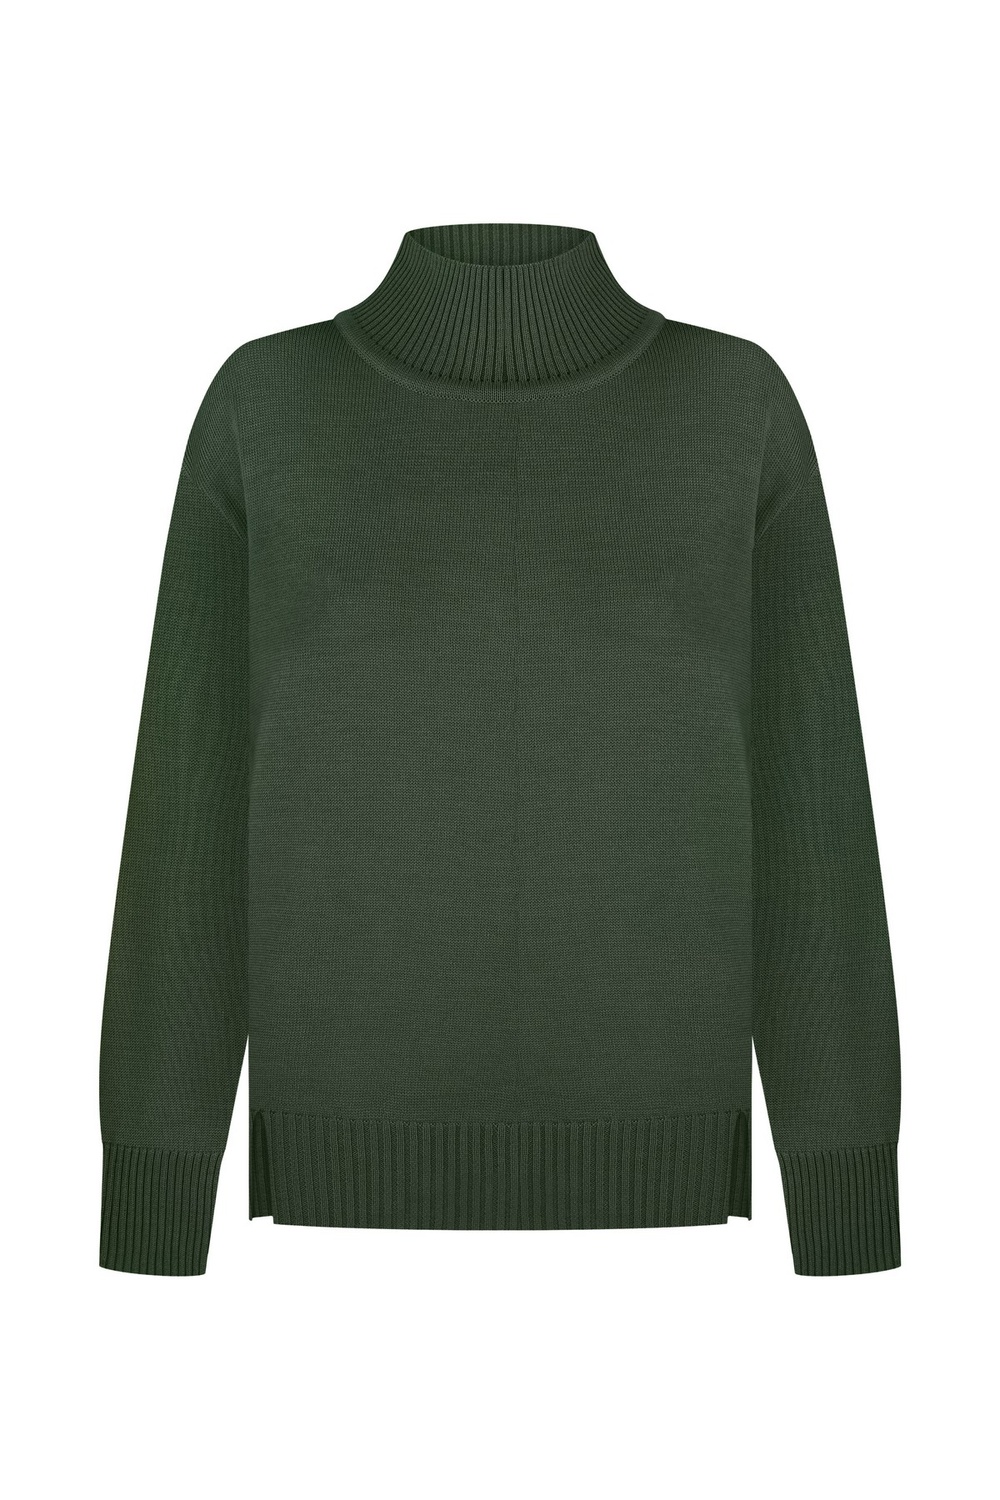 Свитер вязаный из полушерсти мериноса 17 оттенков Sweater_knitted фото